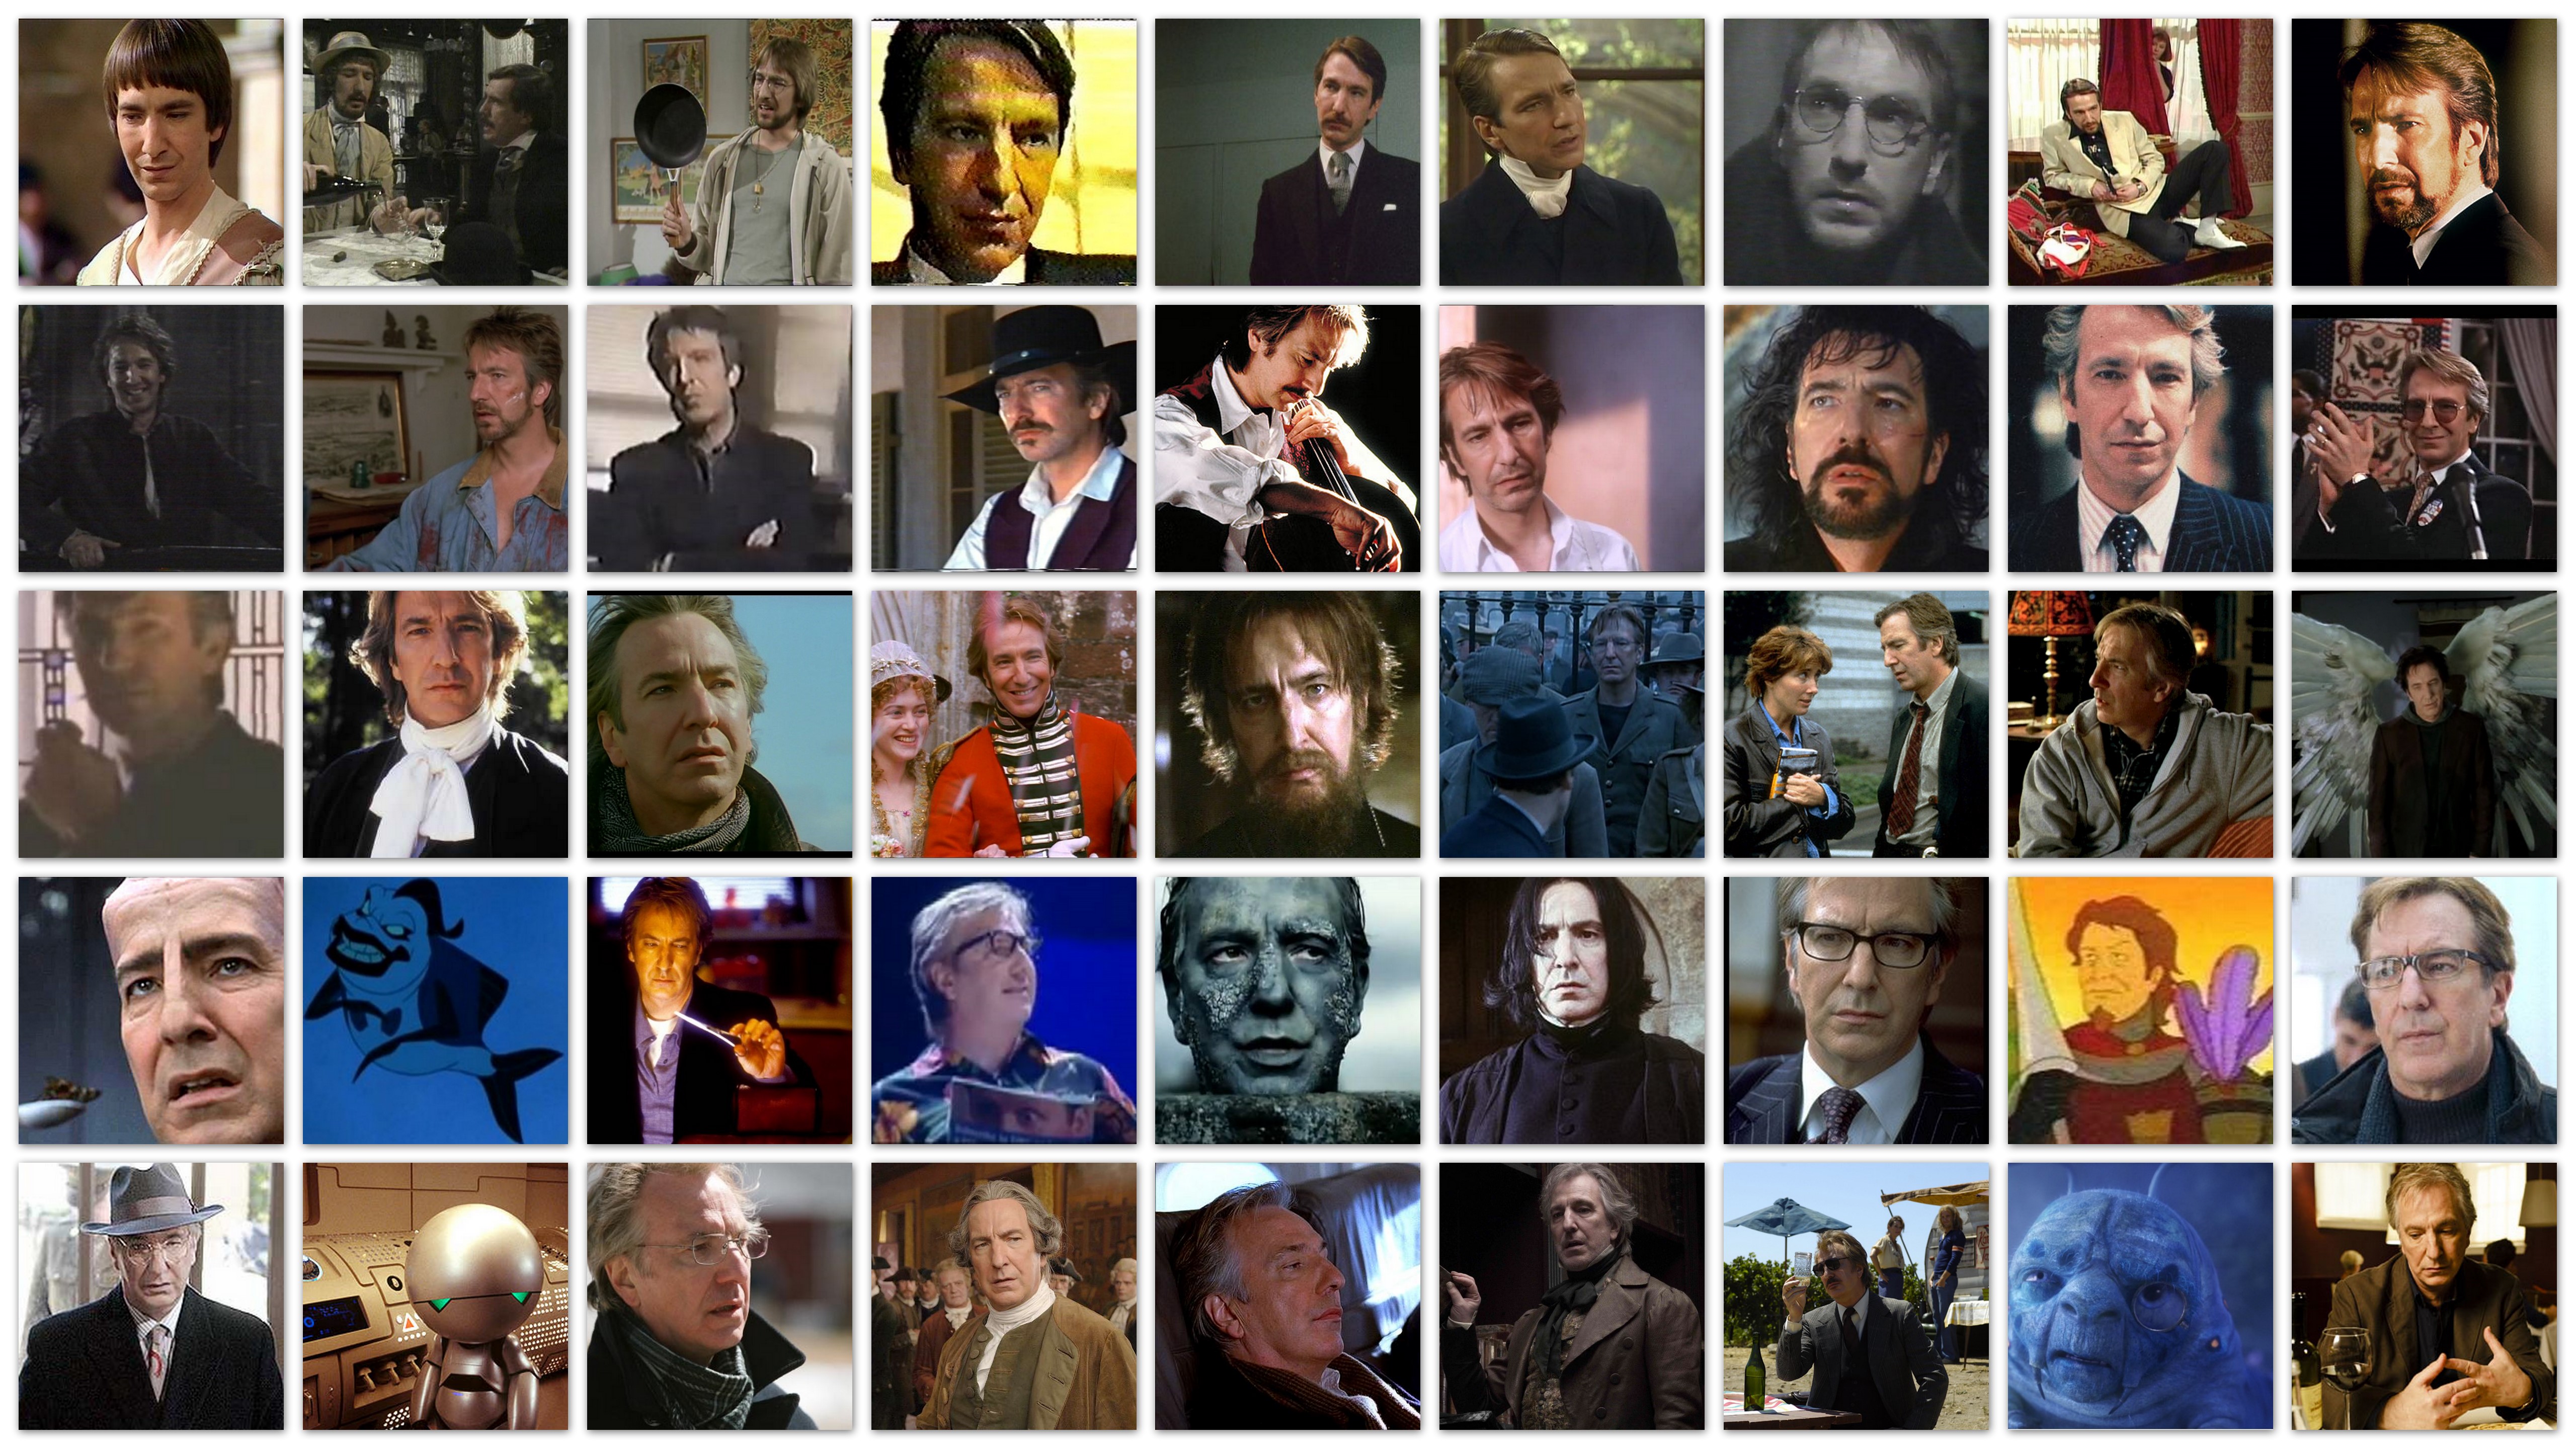 Alan Rickman's 10 Best Roles: See the Full List